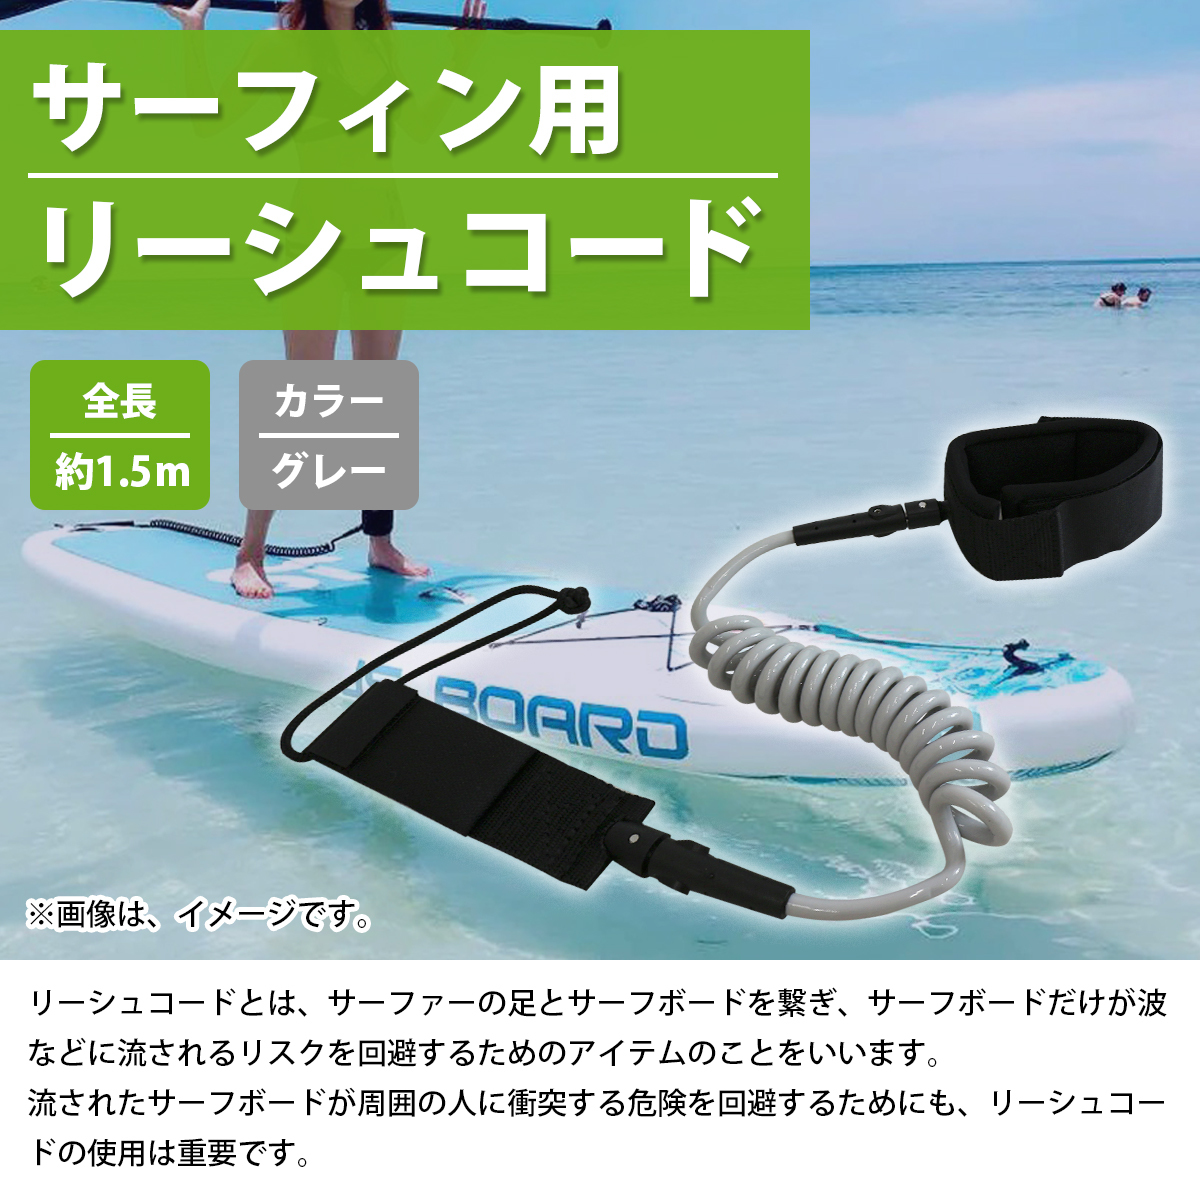  coil leash cord double swivel type 5ft soft board Short boat surfboard body board surfing outdoor ( gray )